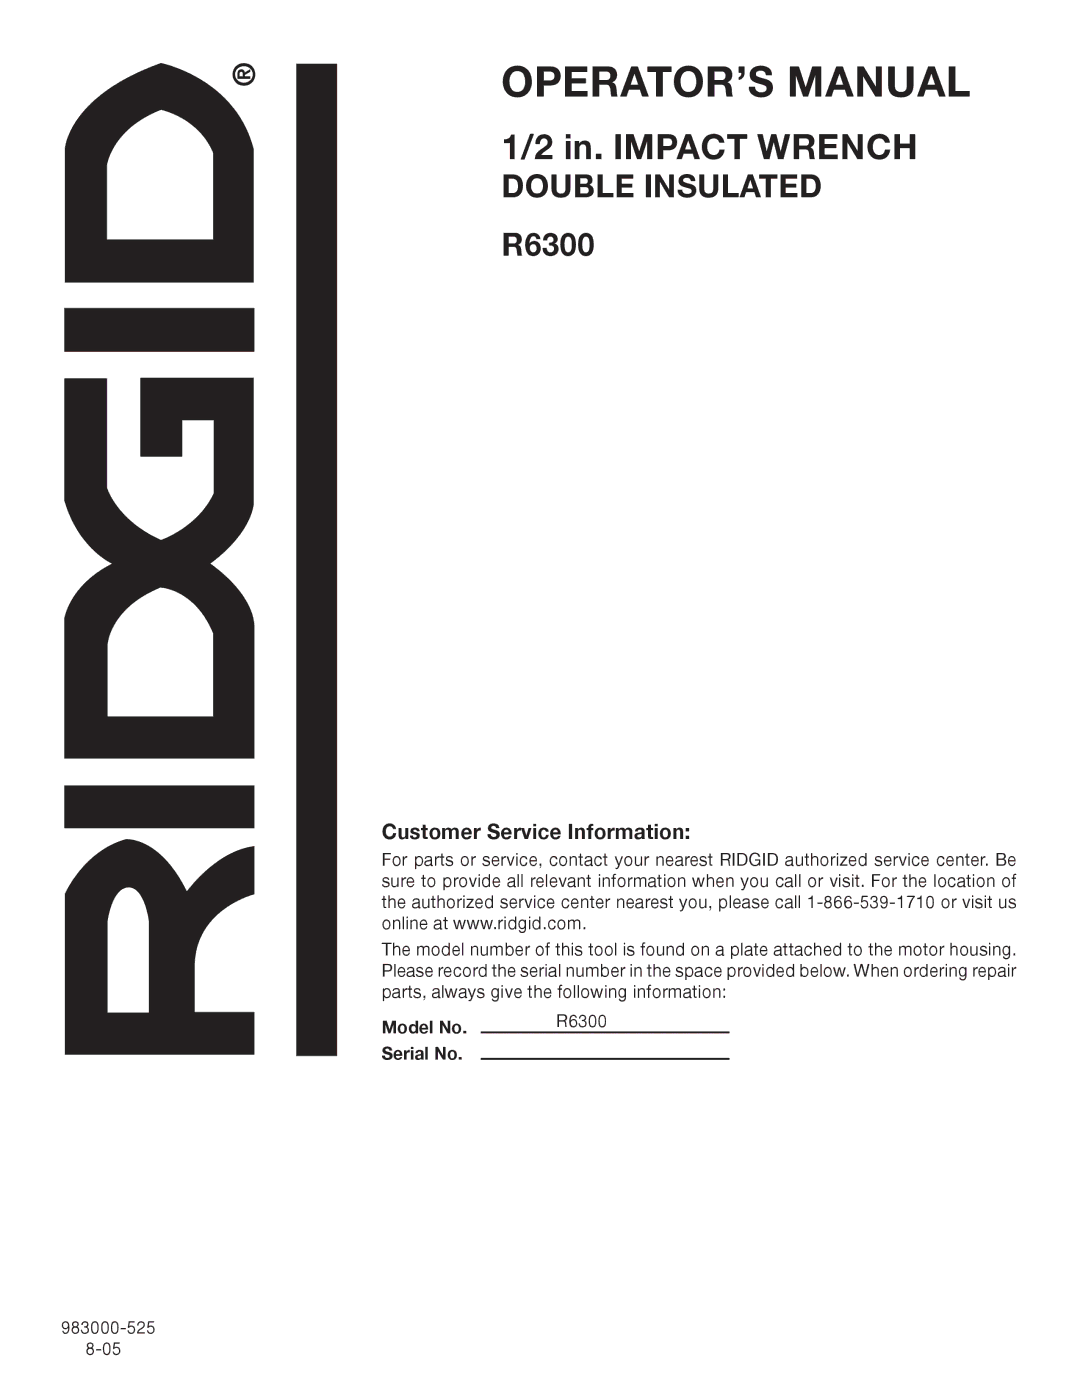 RIDGID R6300 manual Customer Service Information 